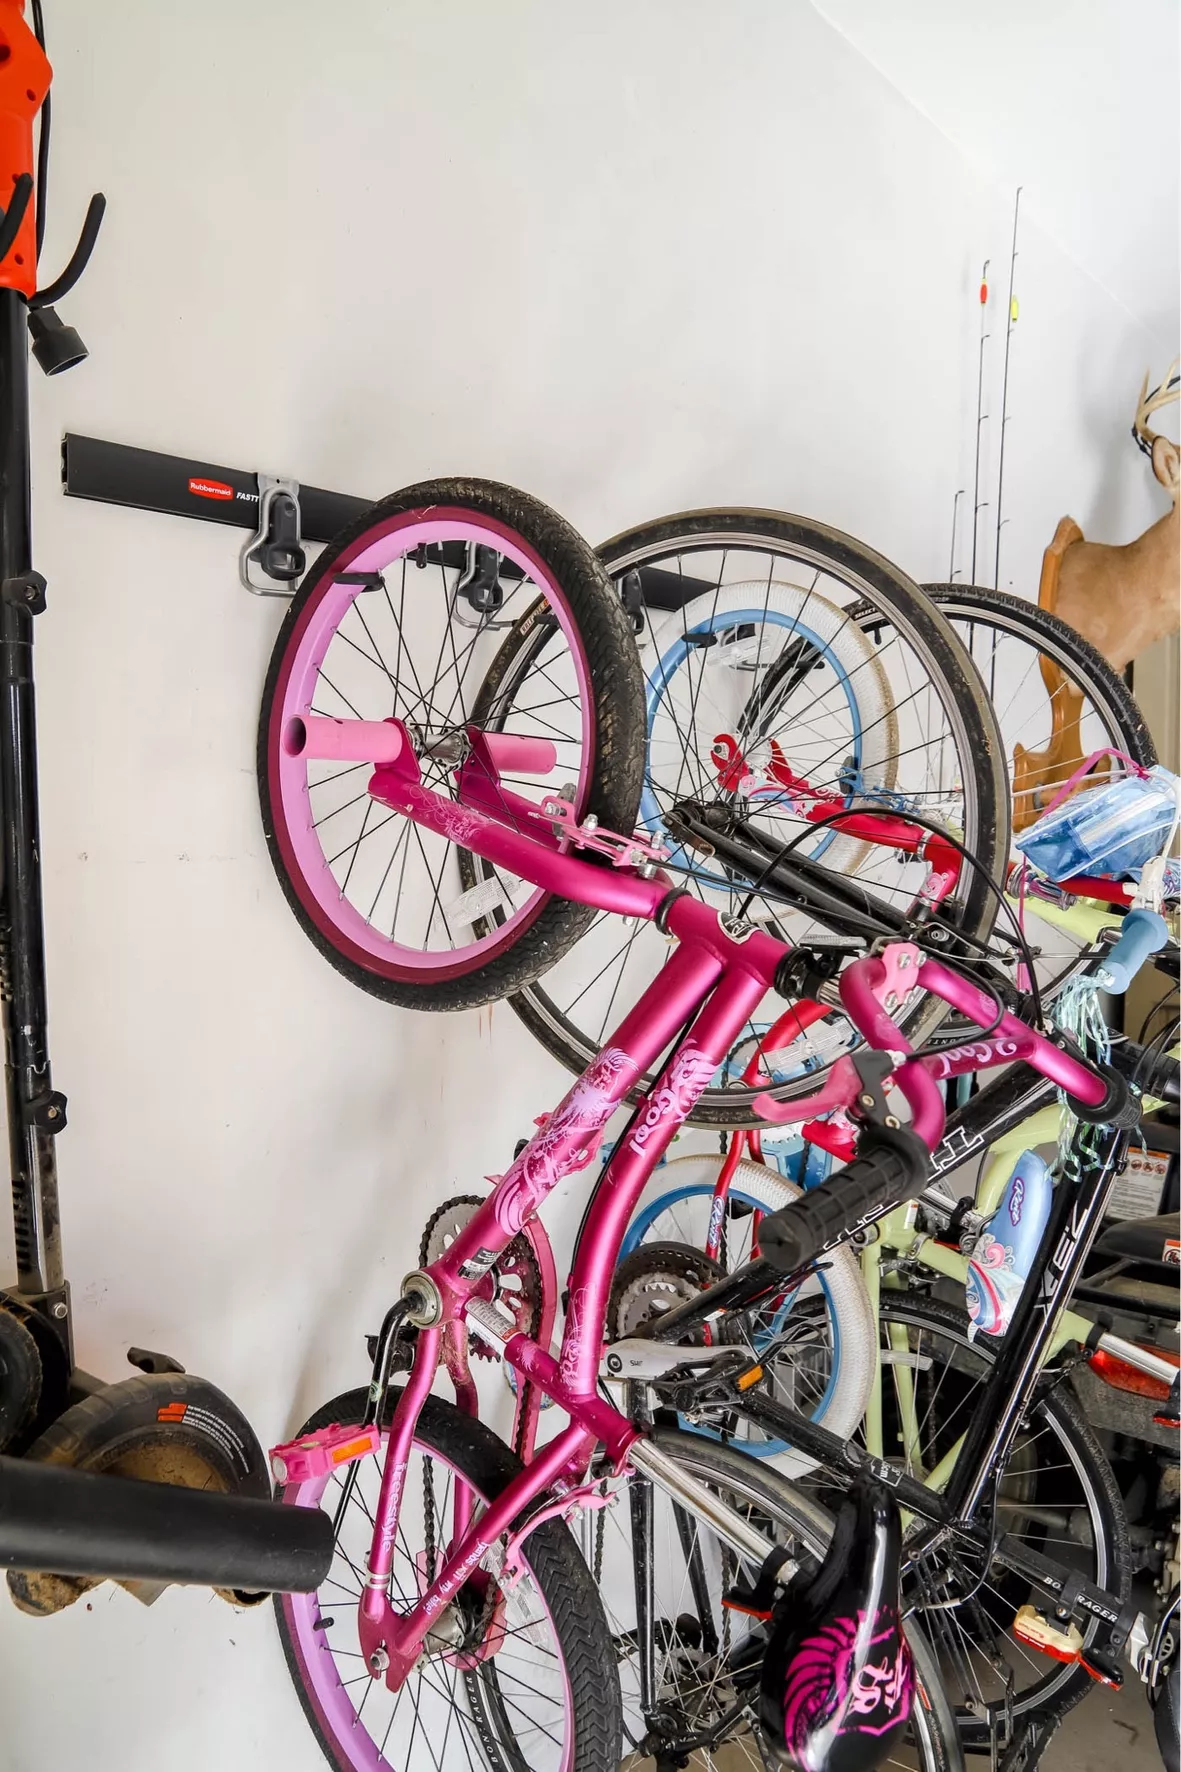 Rubbermaid FastTrack Garage 1-Bike Vertical Bike Hook at